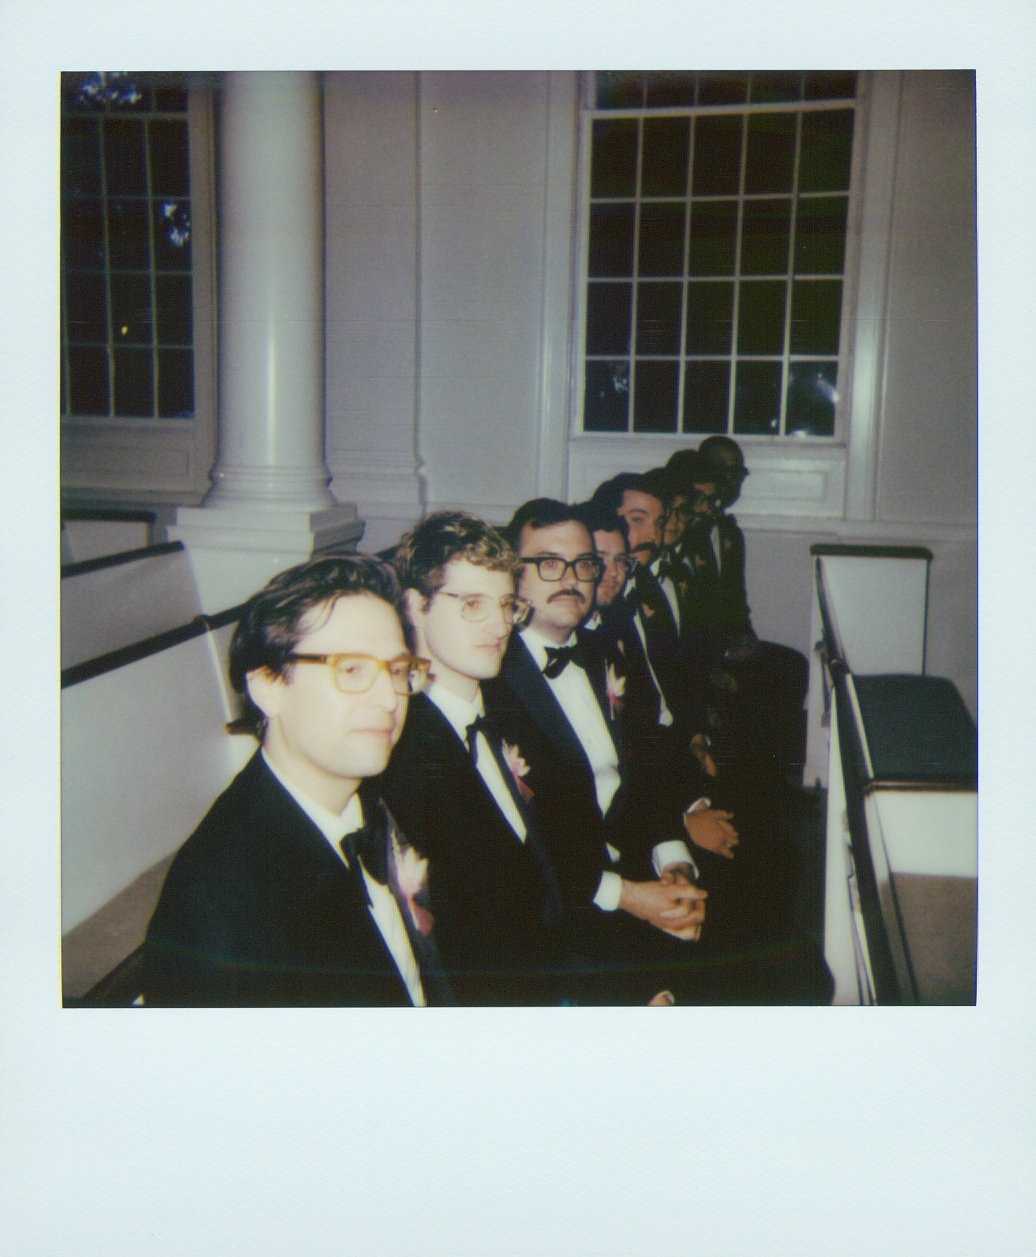 Wedding-taken-on-polaroids27.jpg